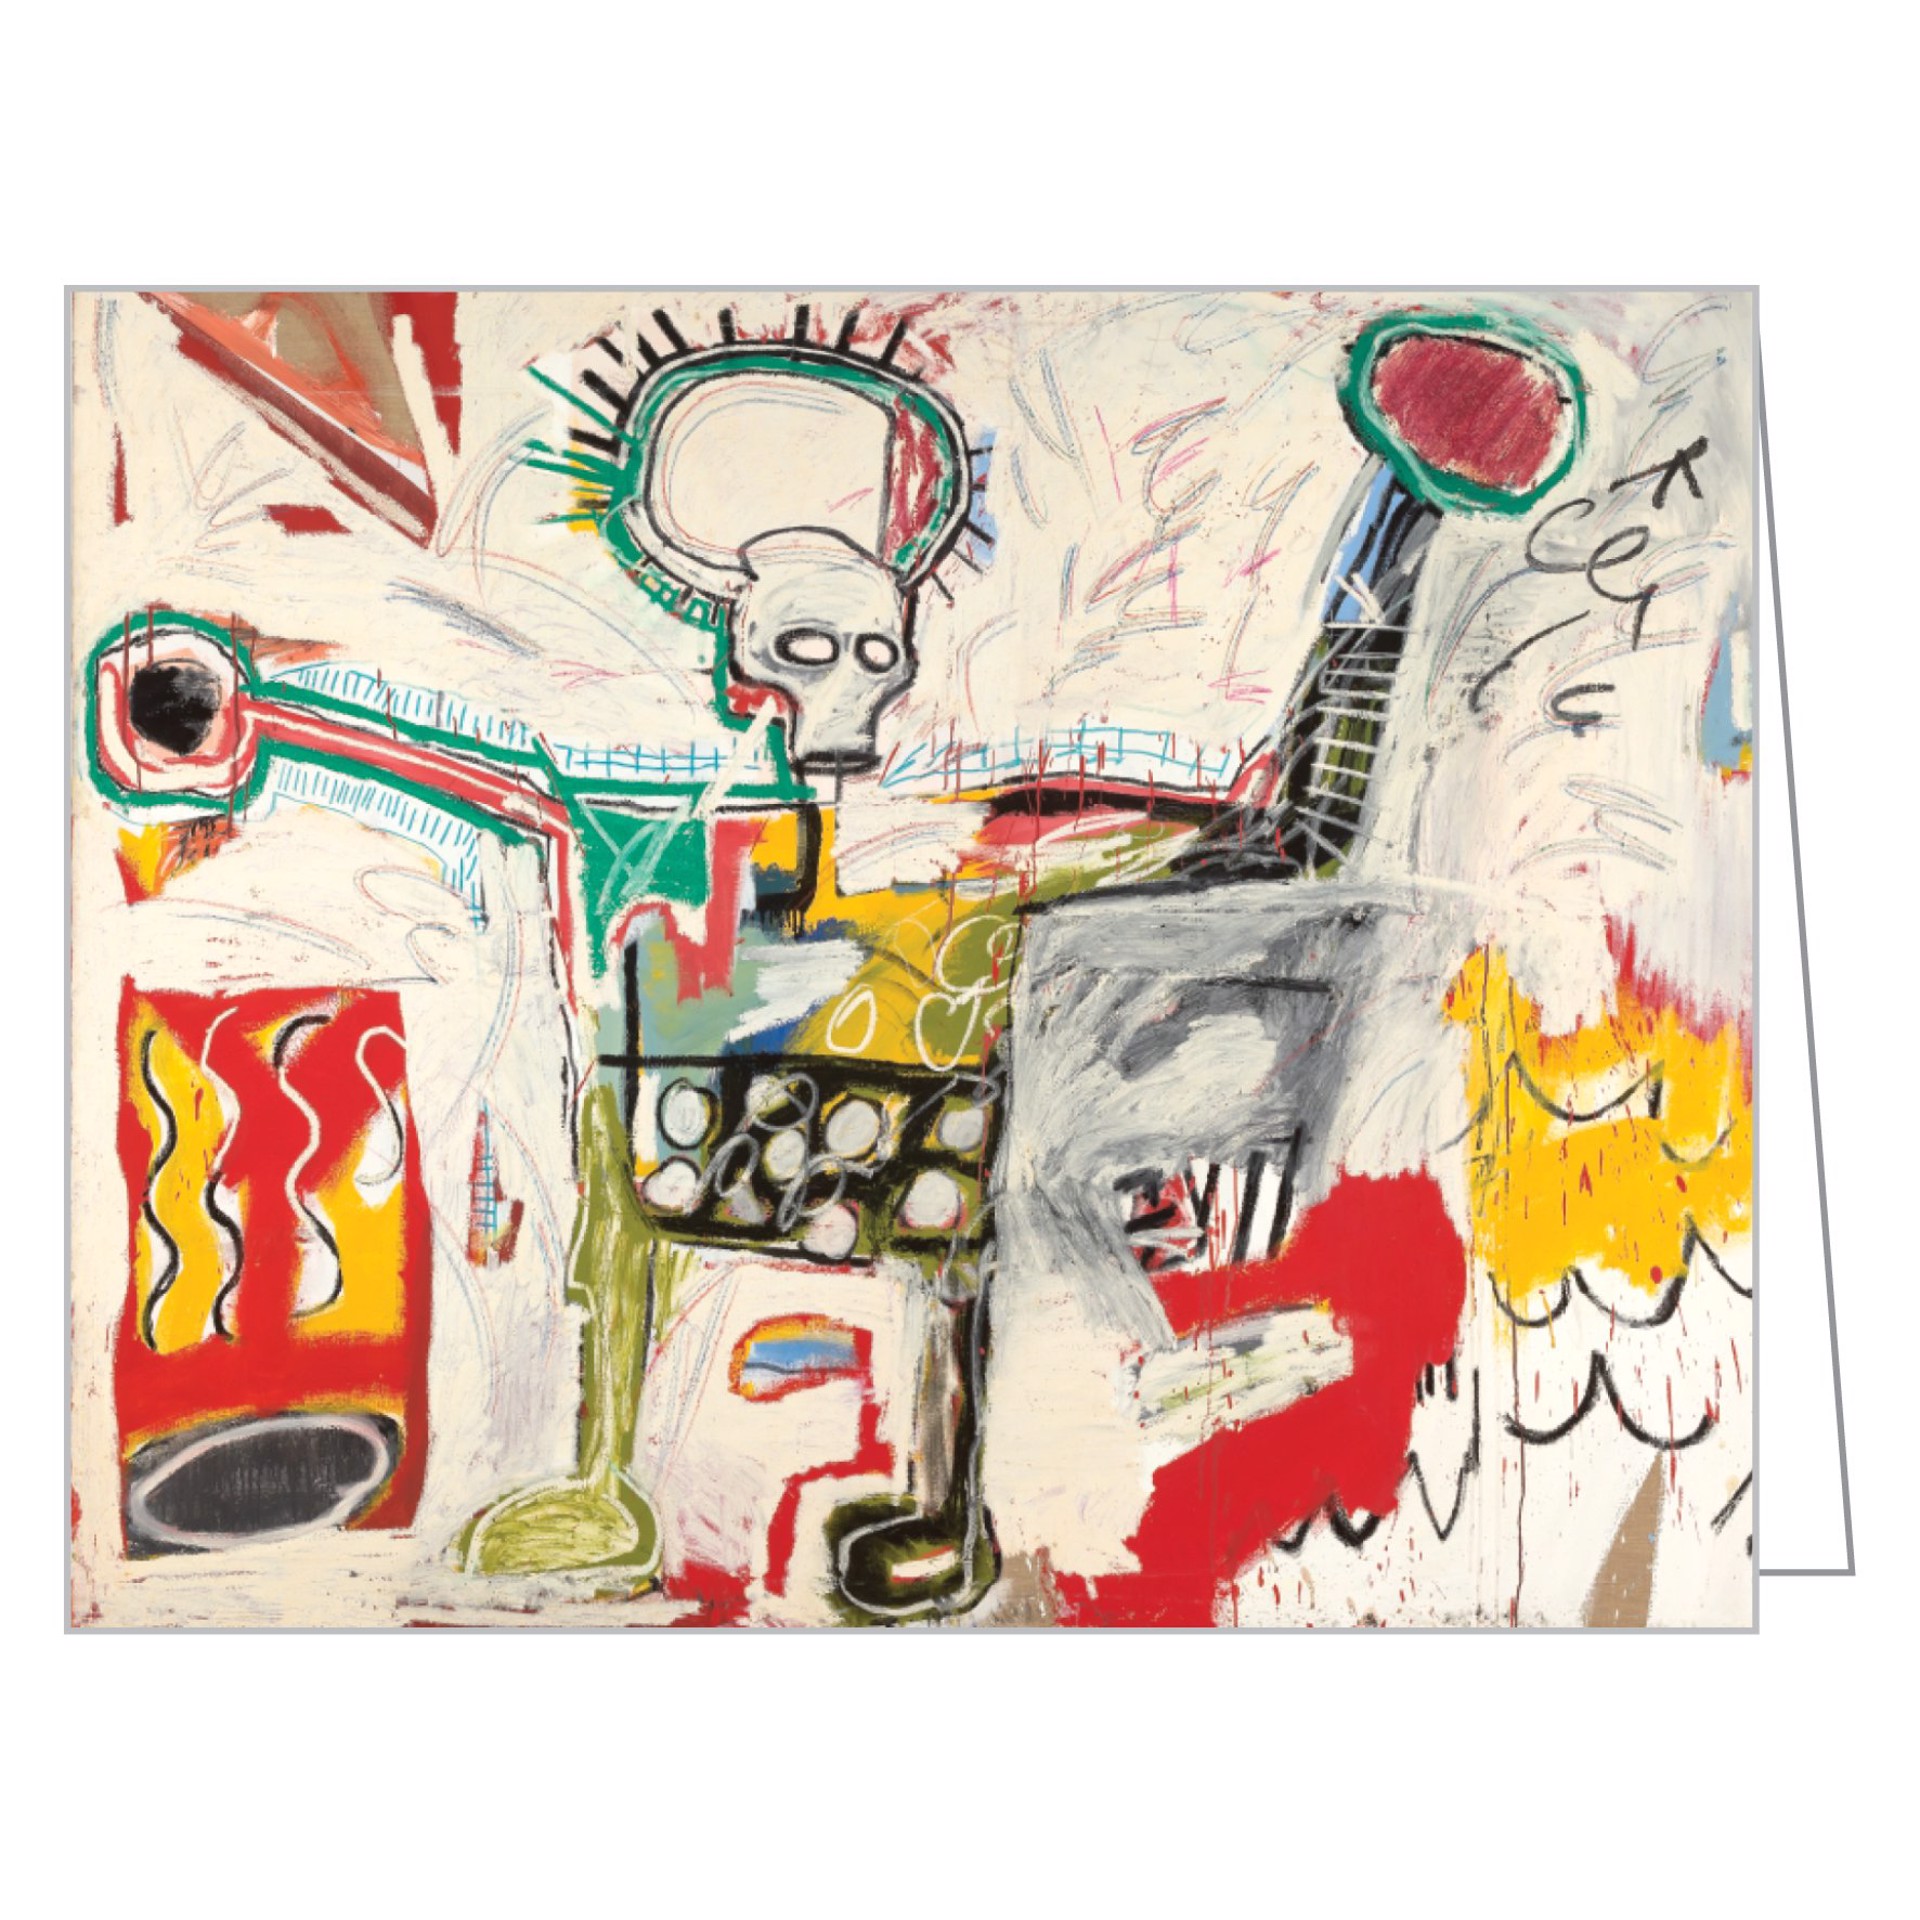 Jean-Michel Basquiat QuickNotes by Jean-Michel Basquiat